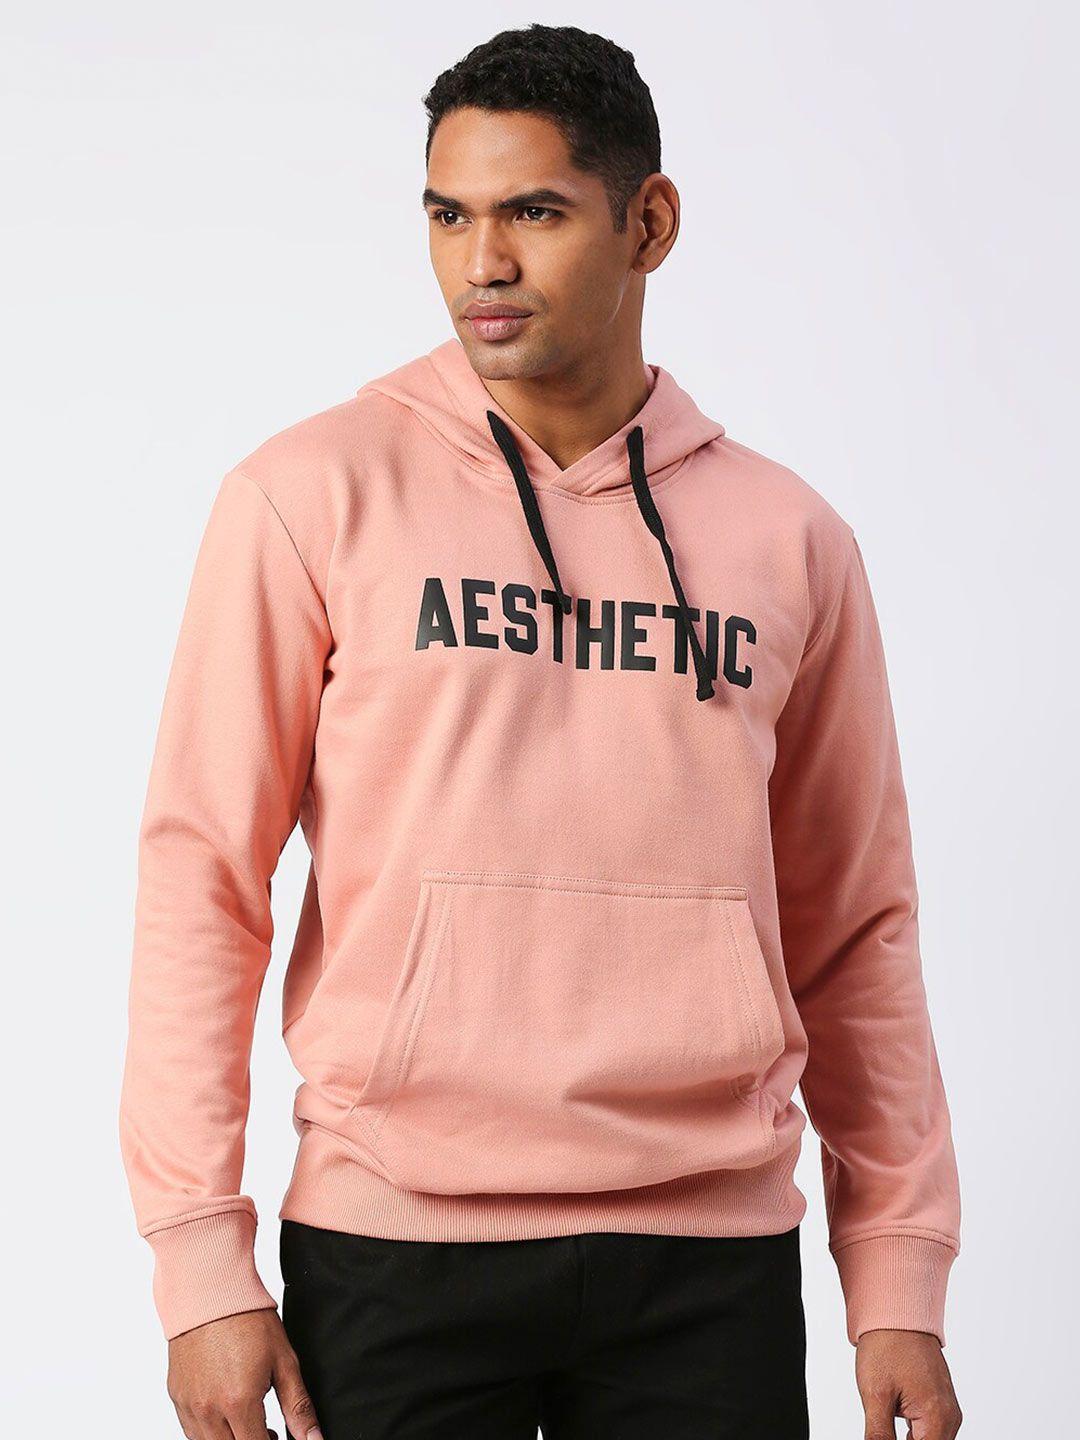 aesthetic nation men printed hooded cotton sweatshirt